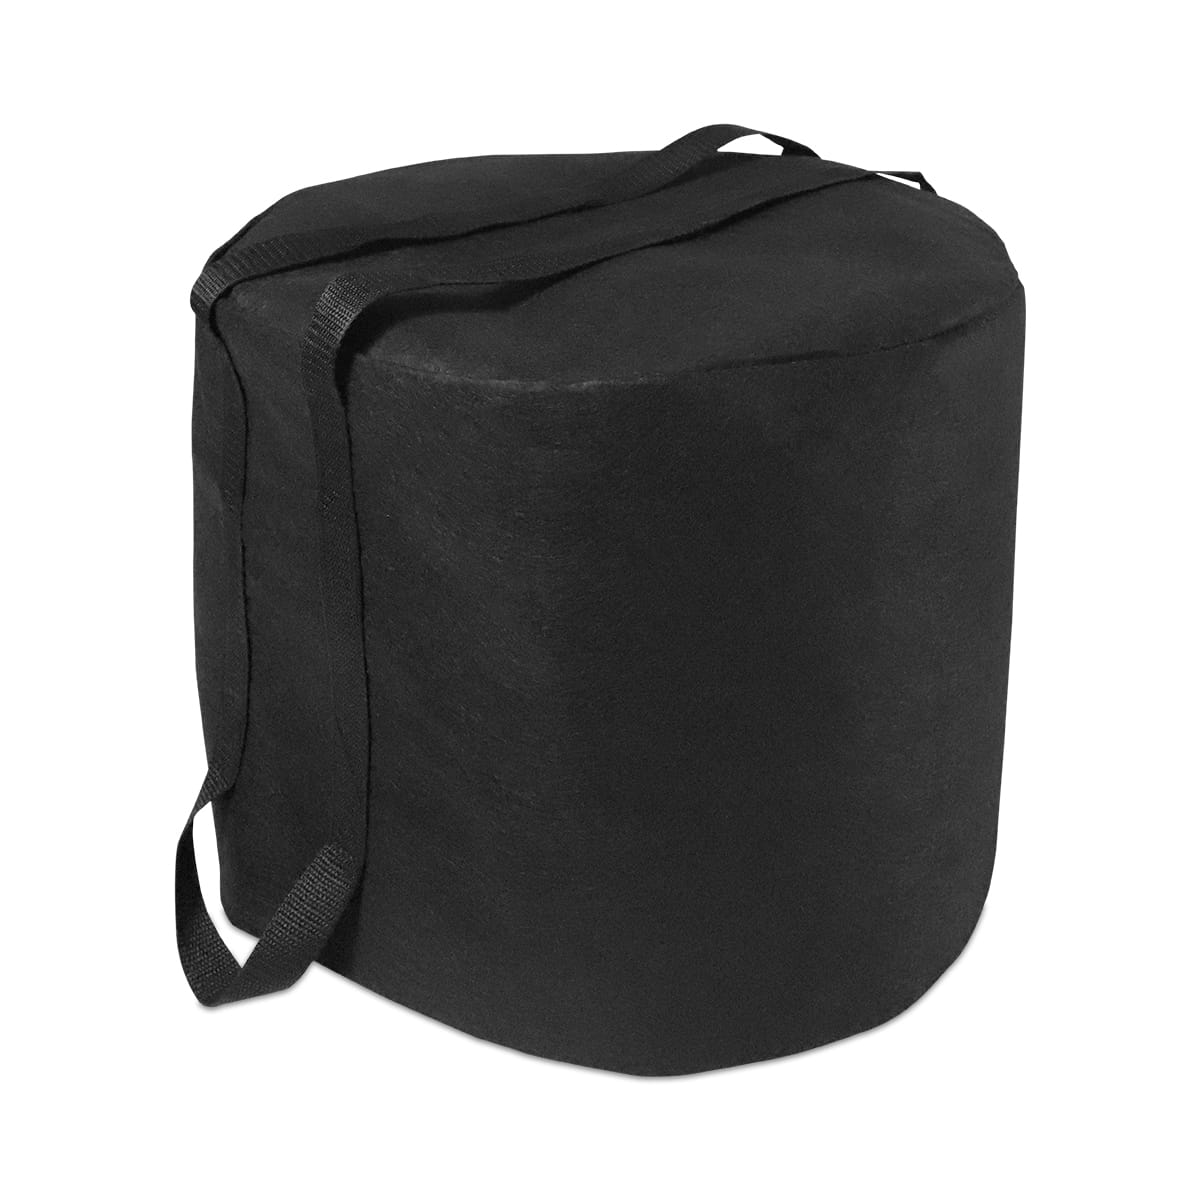 Phat Sack Black 10 Gallon Fabric Pot Support Straps